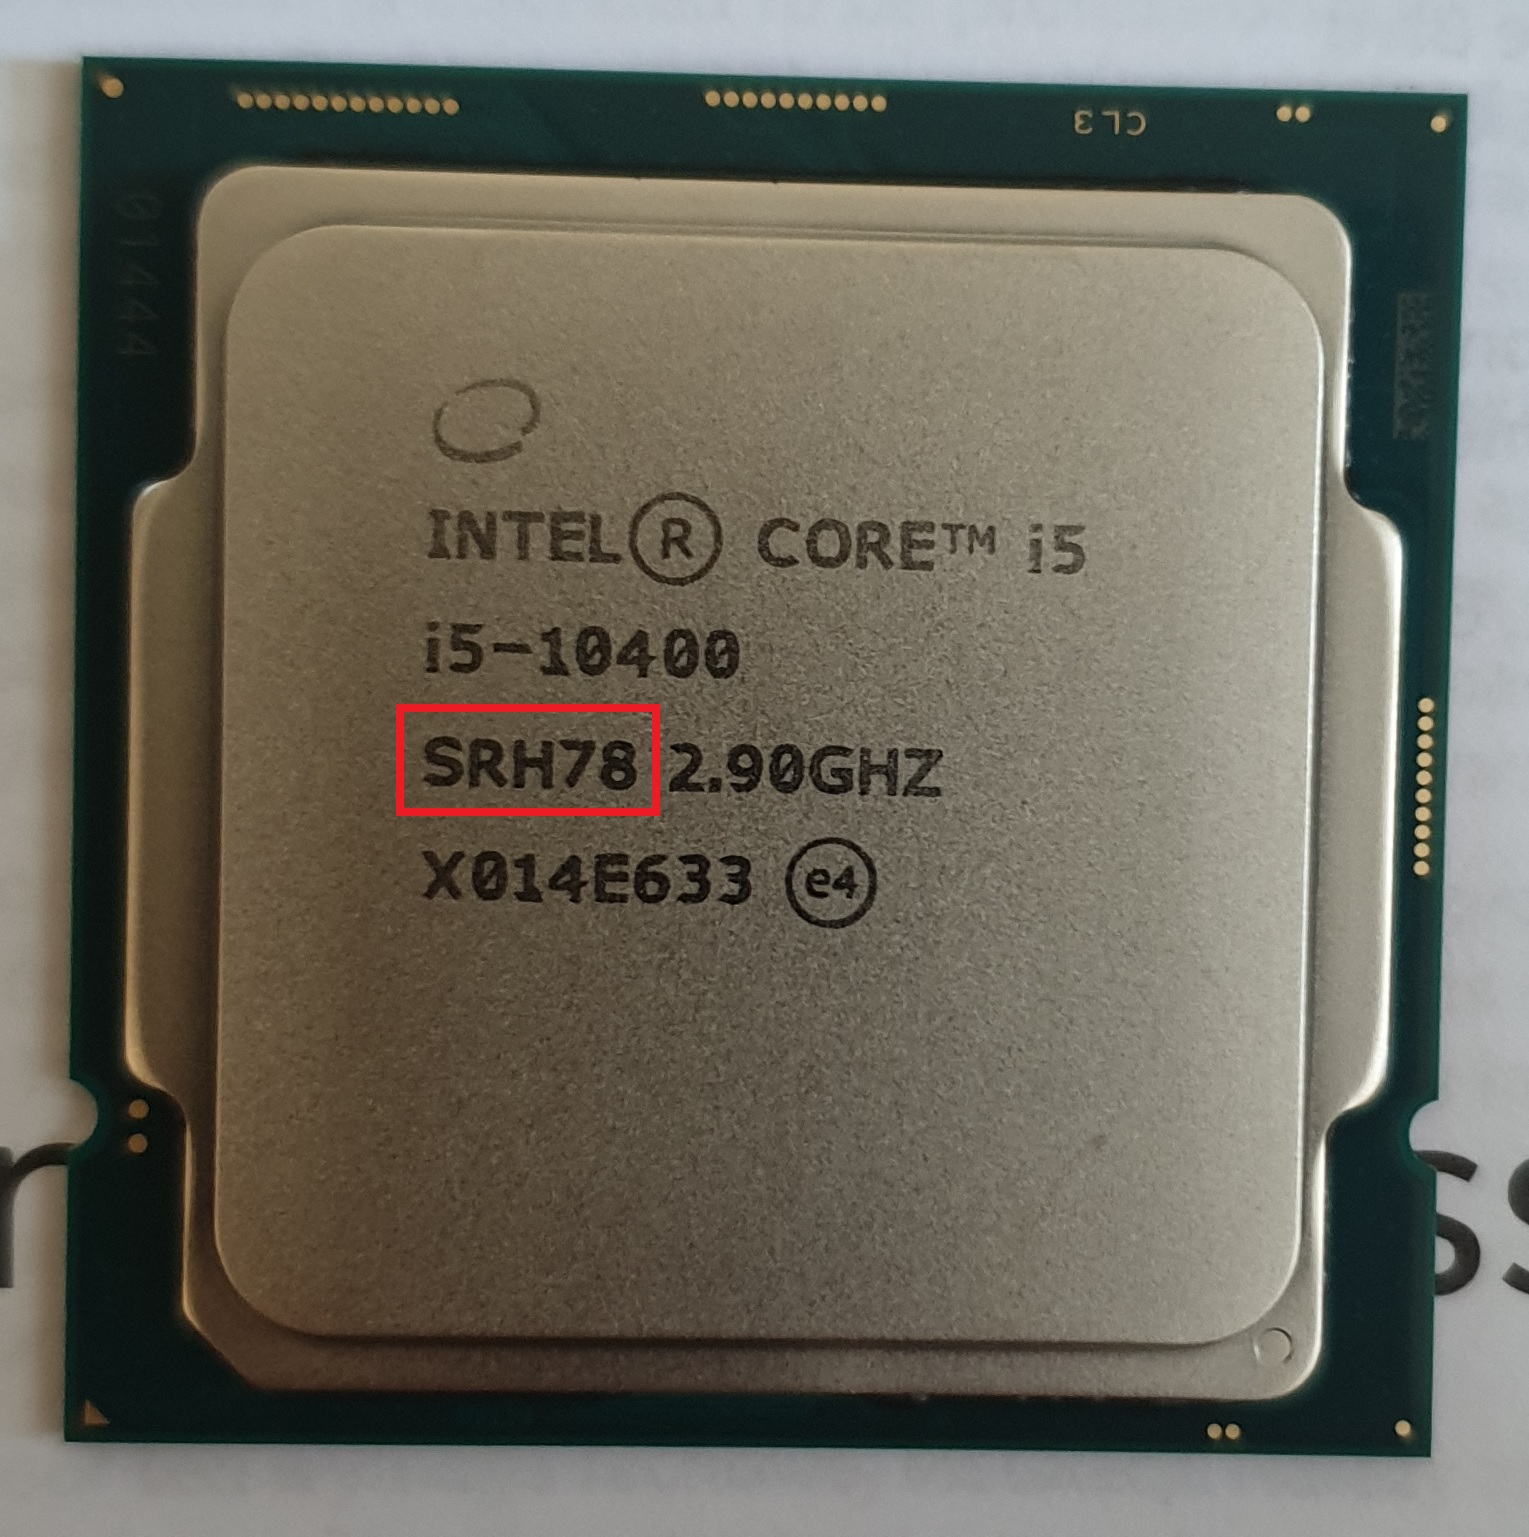 Интел коре 12400. Процессор Intel Core i5-10400. Процессор Intel Core i5 12400f. I5 10400f. CPU Intel Core i5-10400f.